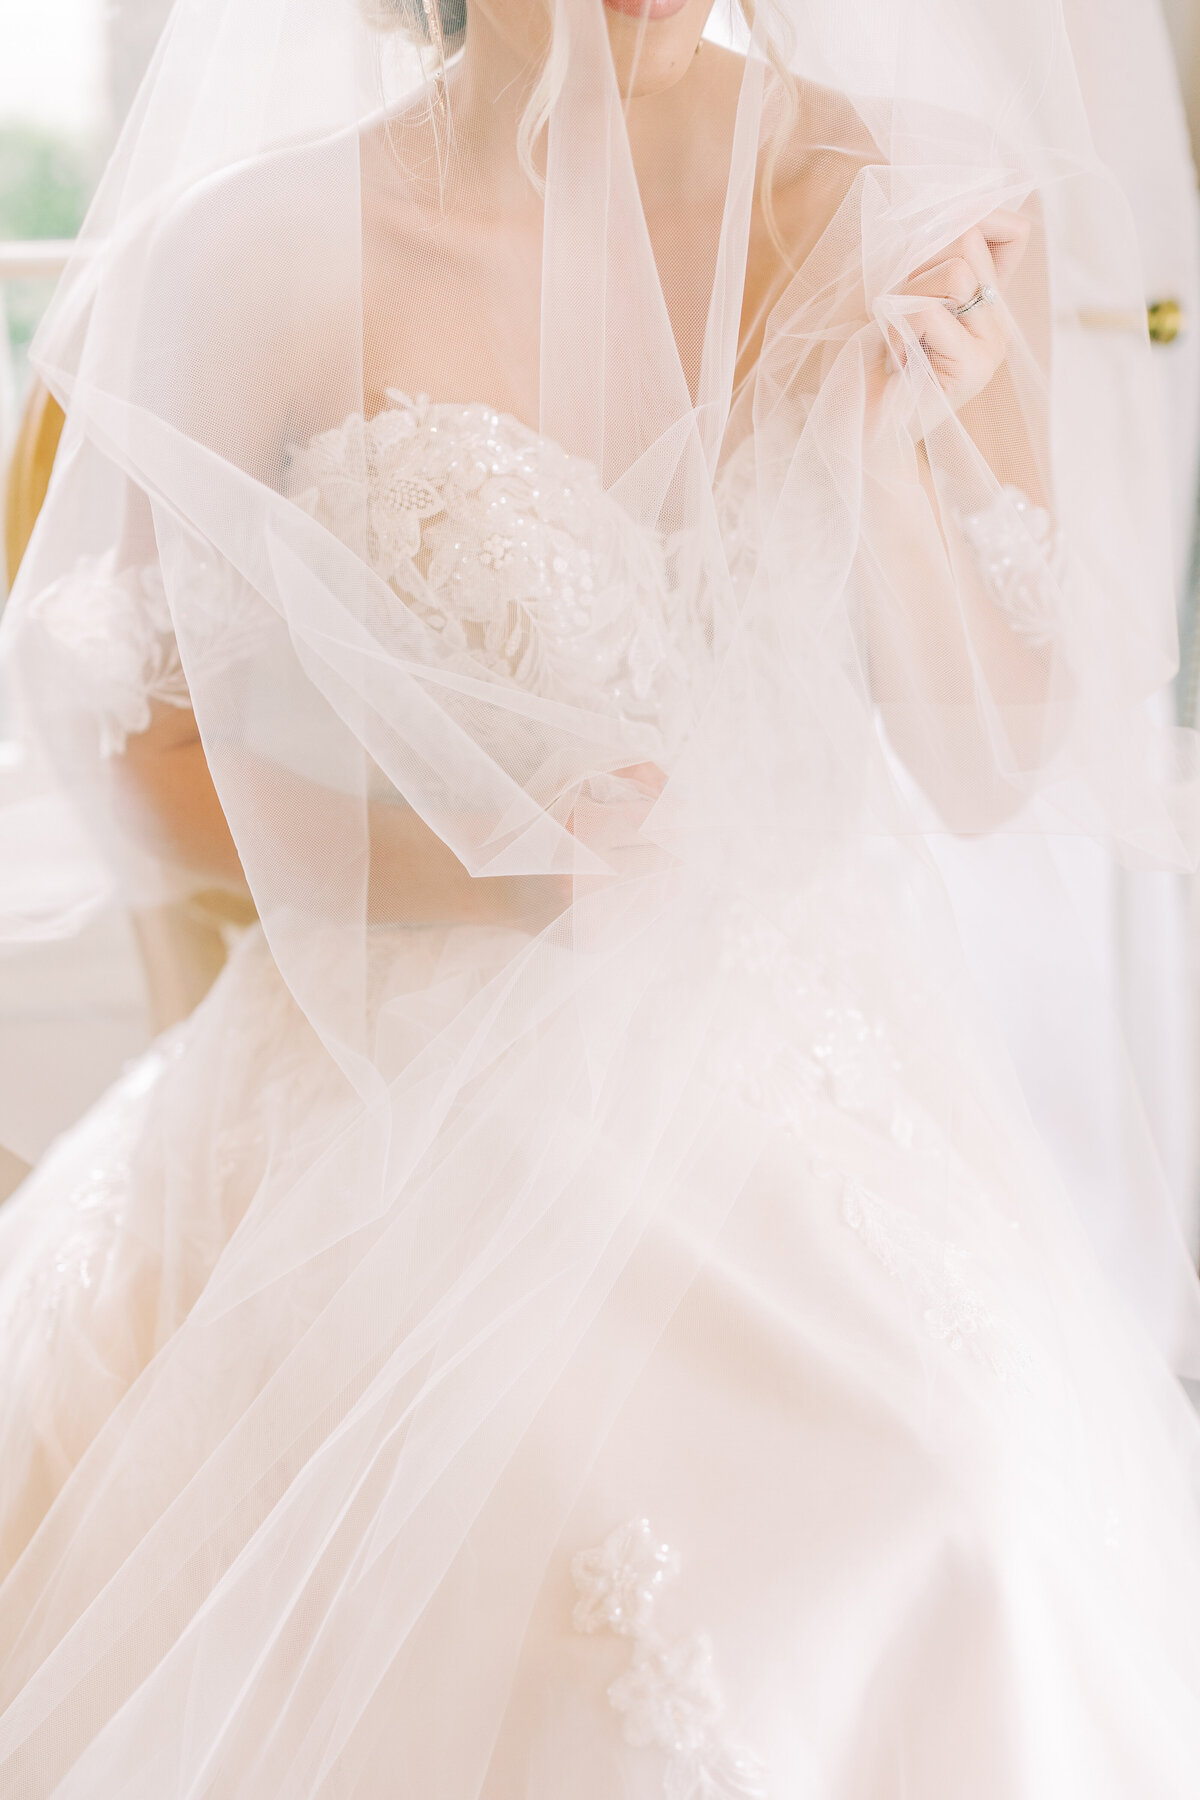 bride holding long veil